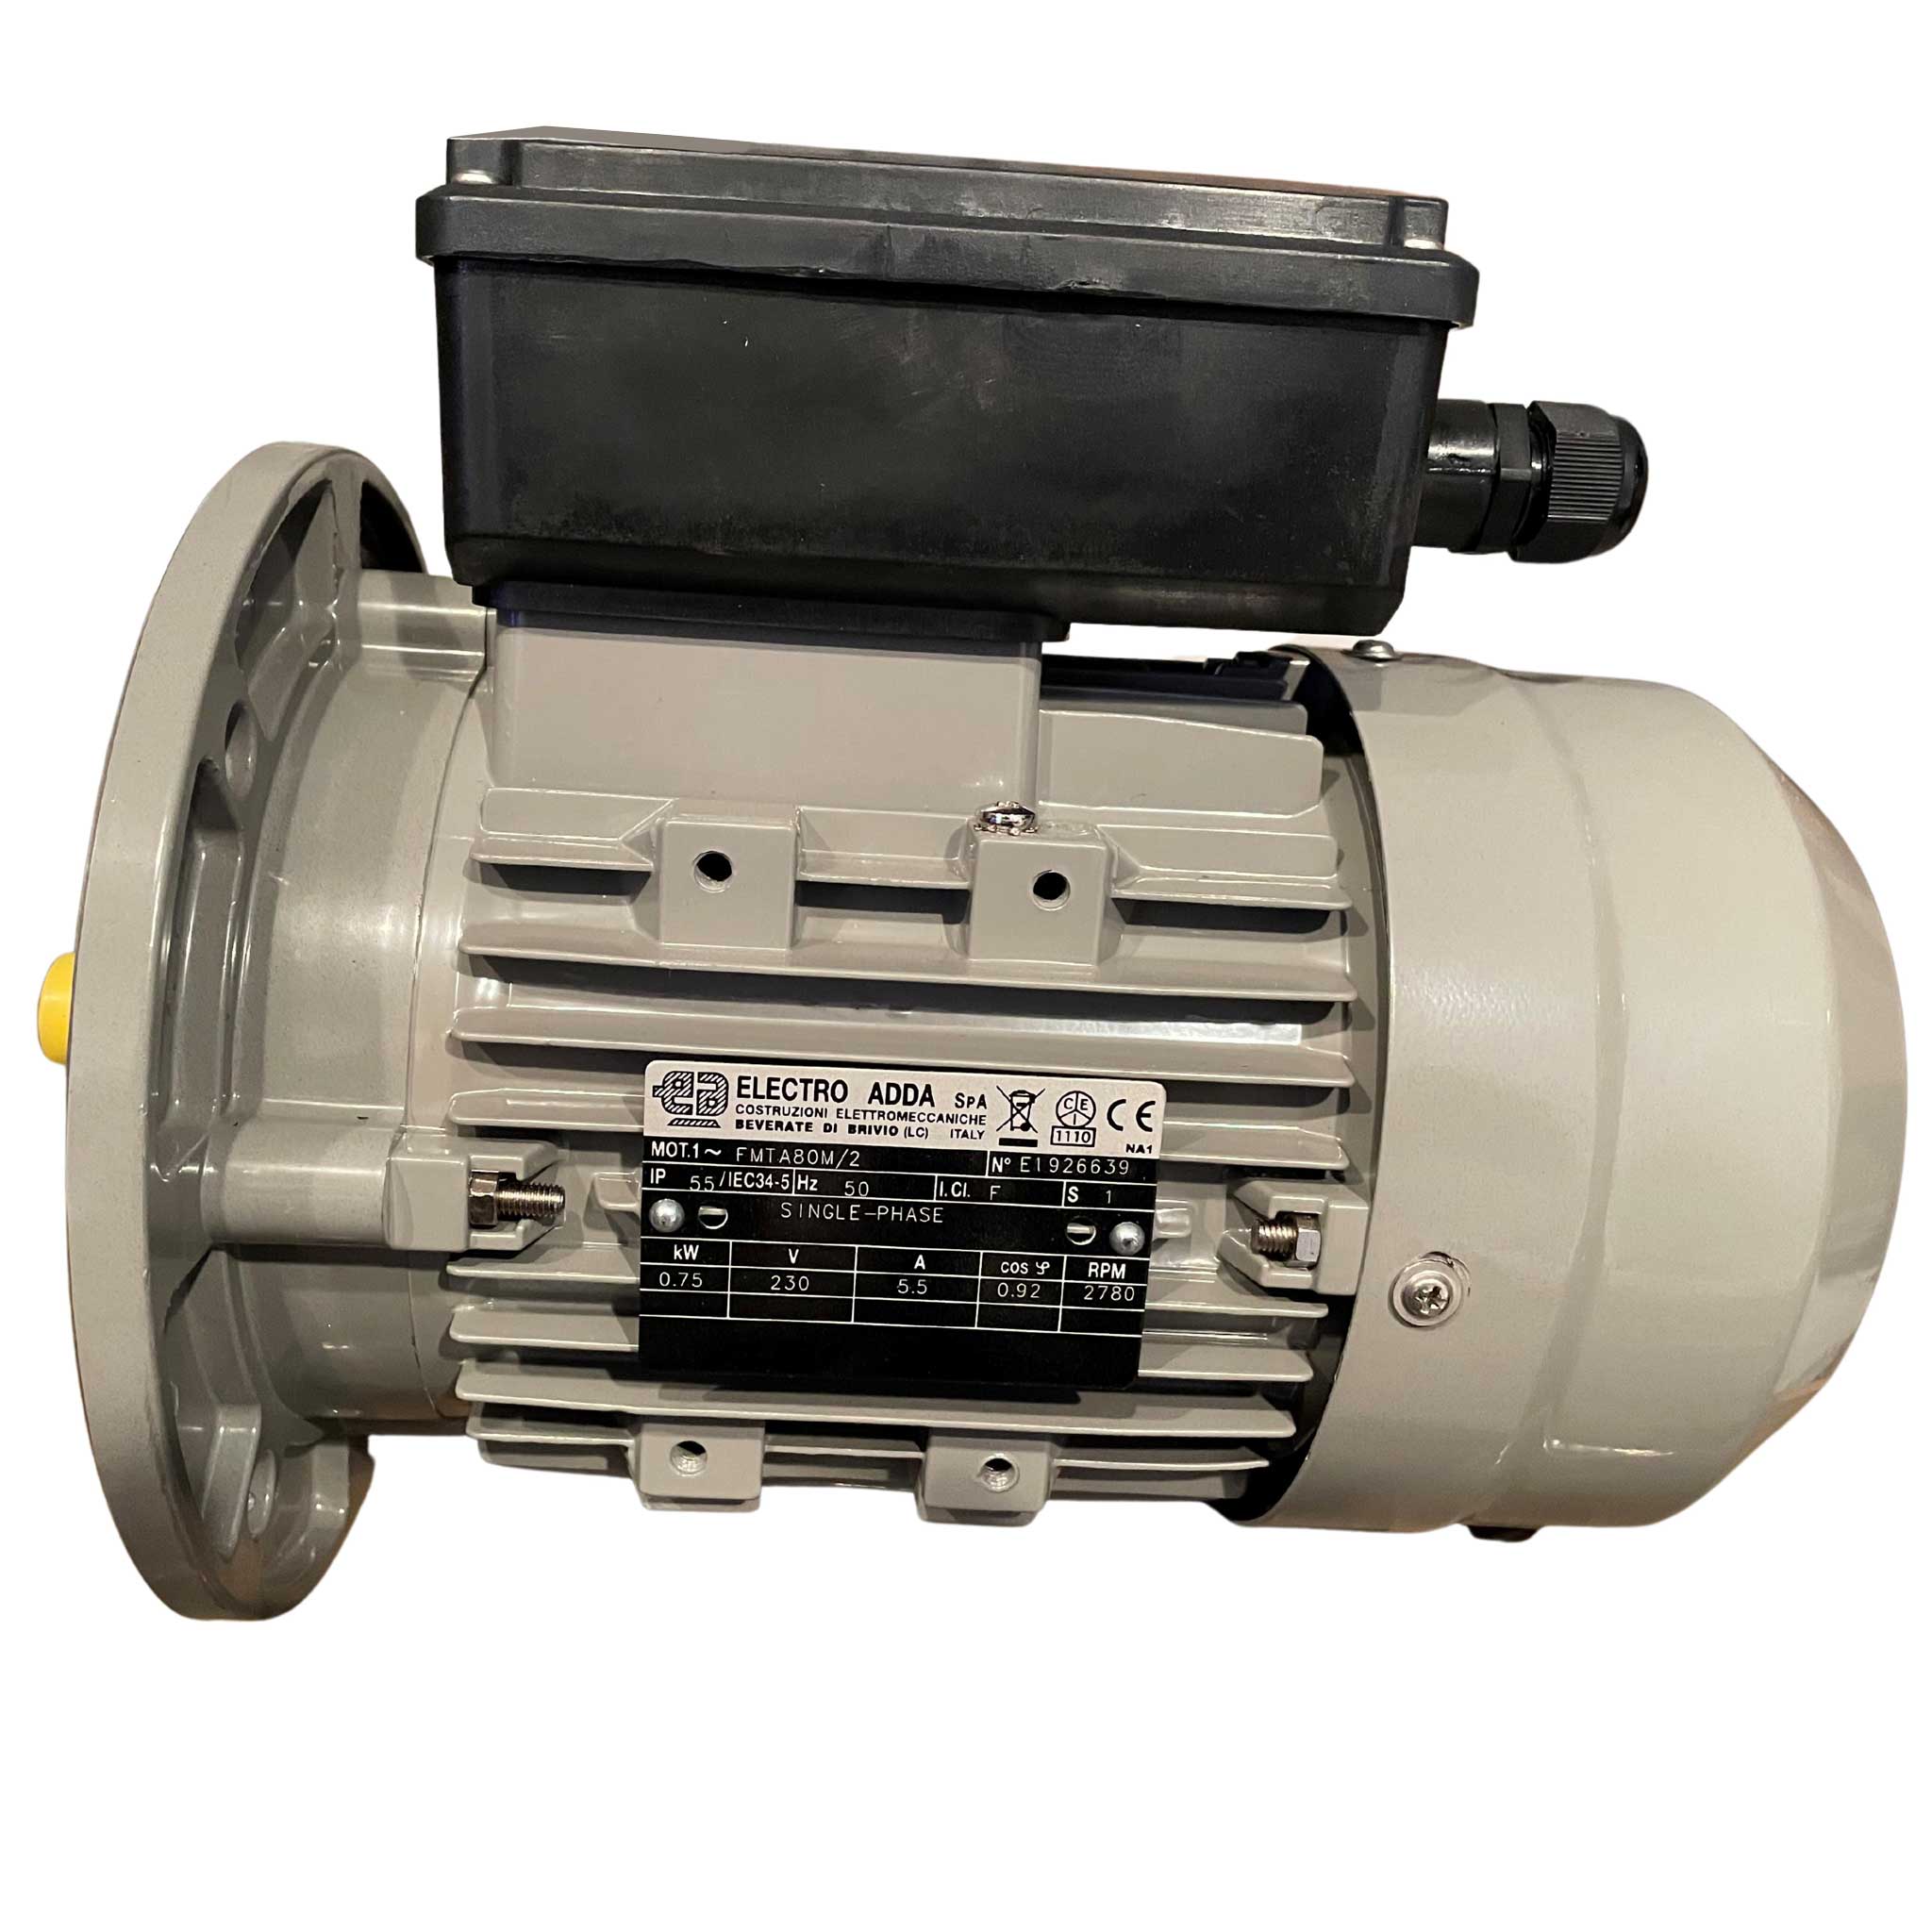 Electro Adda motor FMT A80 M/2 S/N E1926639